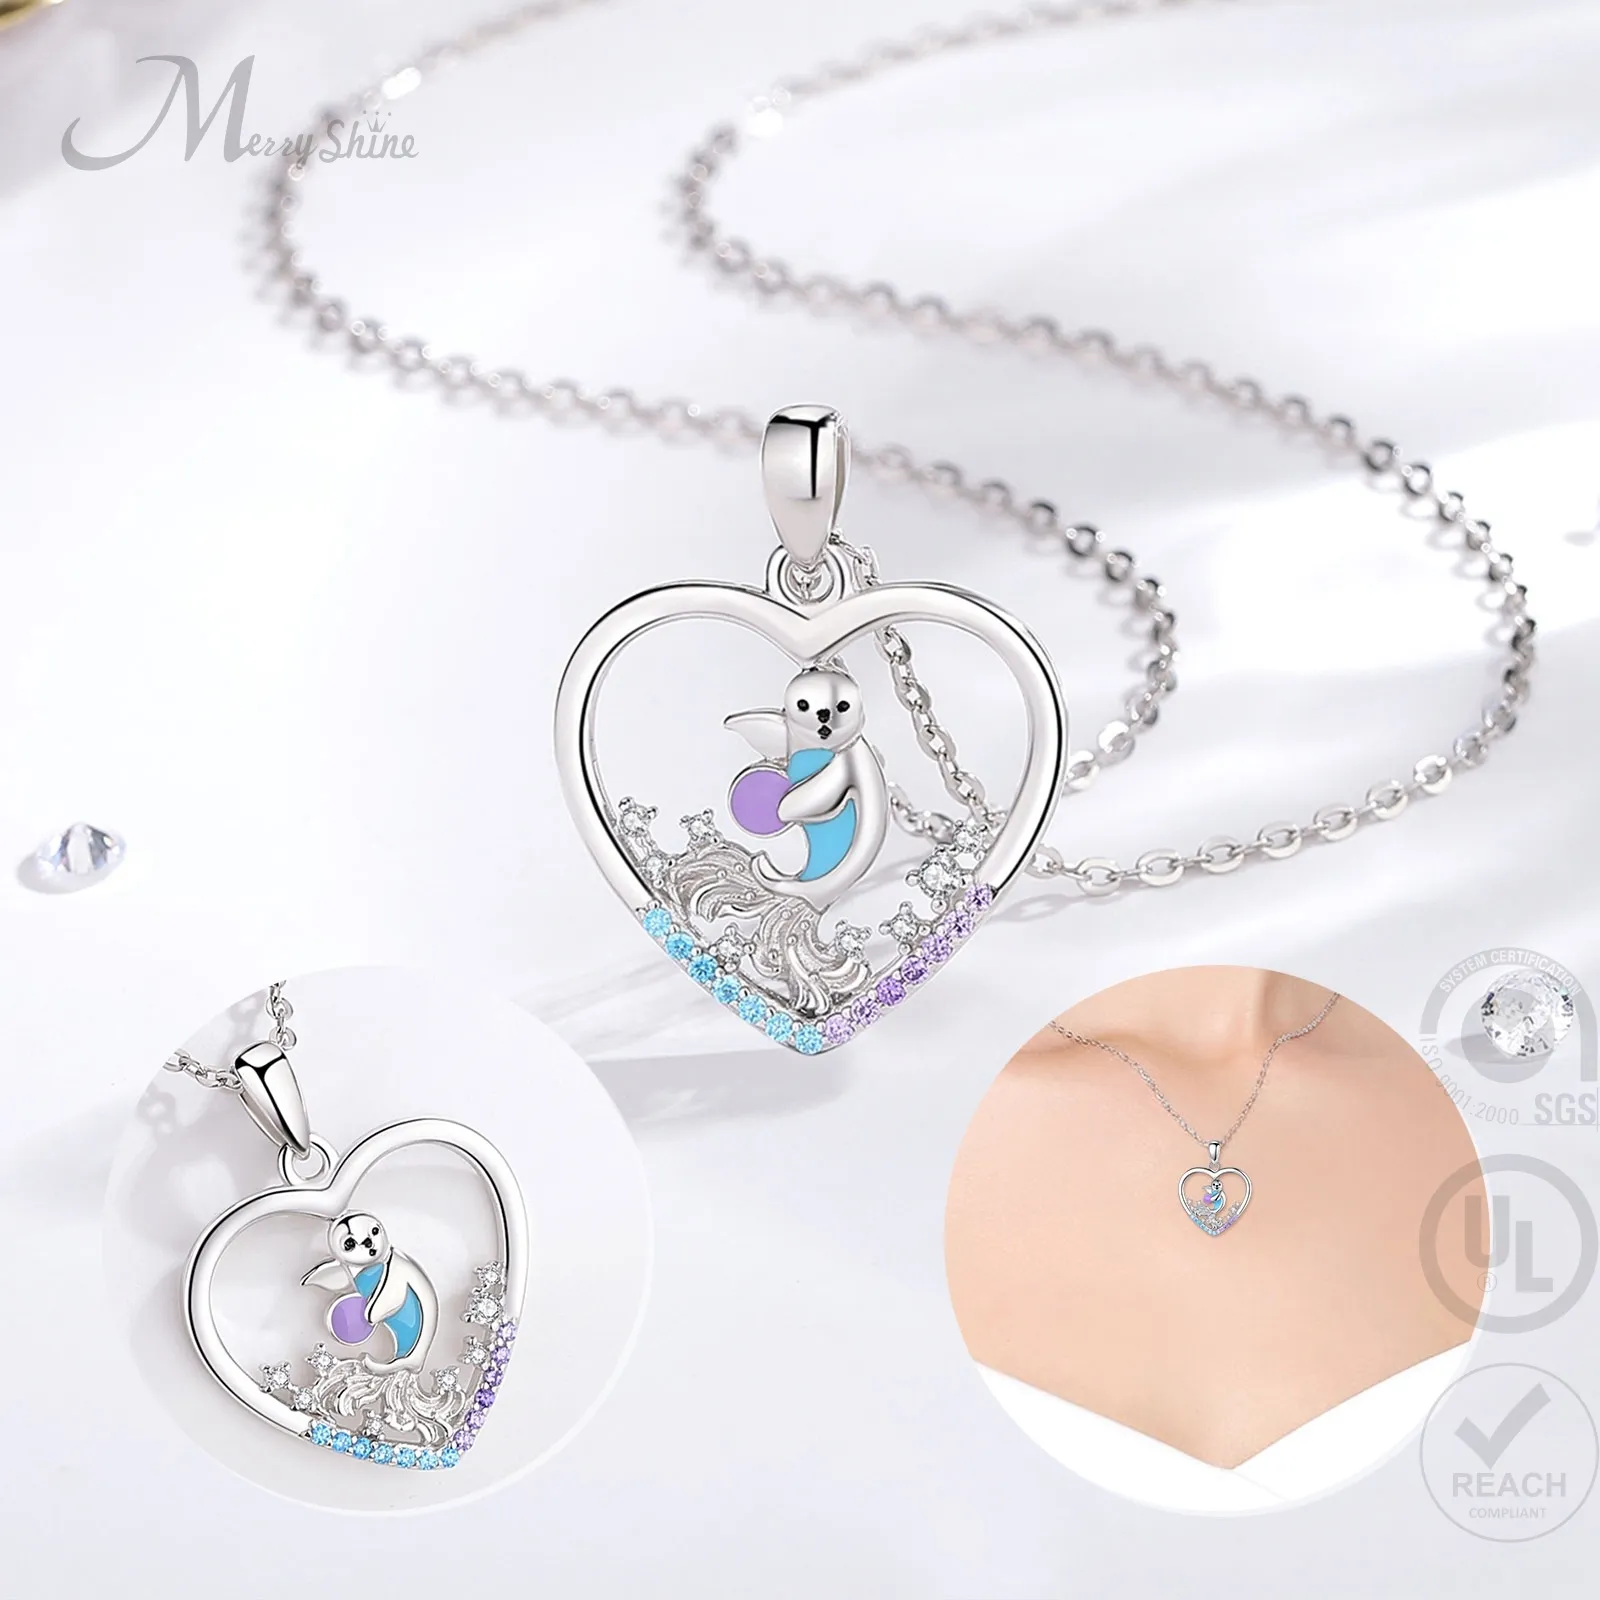 Merryshine 925 Sterling silver fashion enamel sea lion cute animal pendant jewelry for women